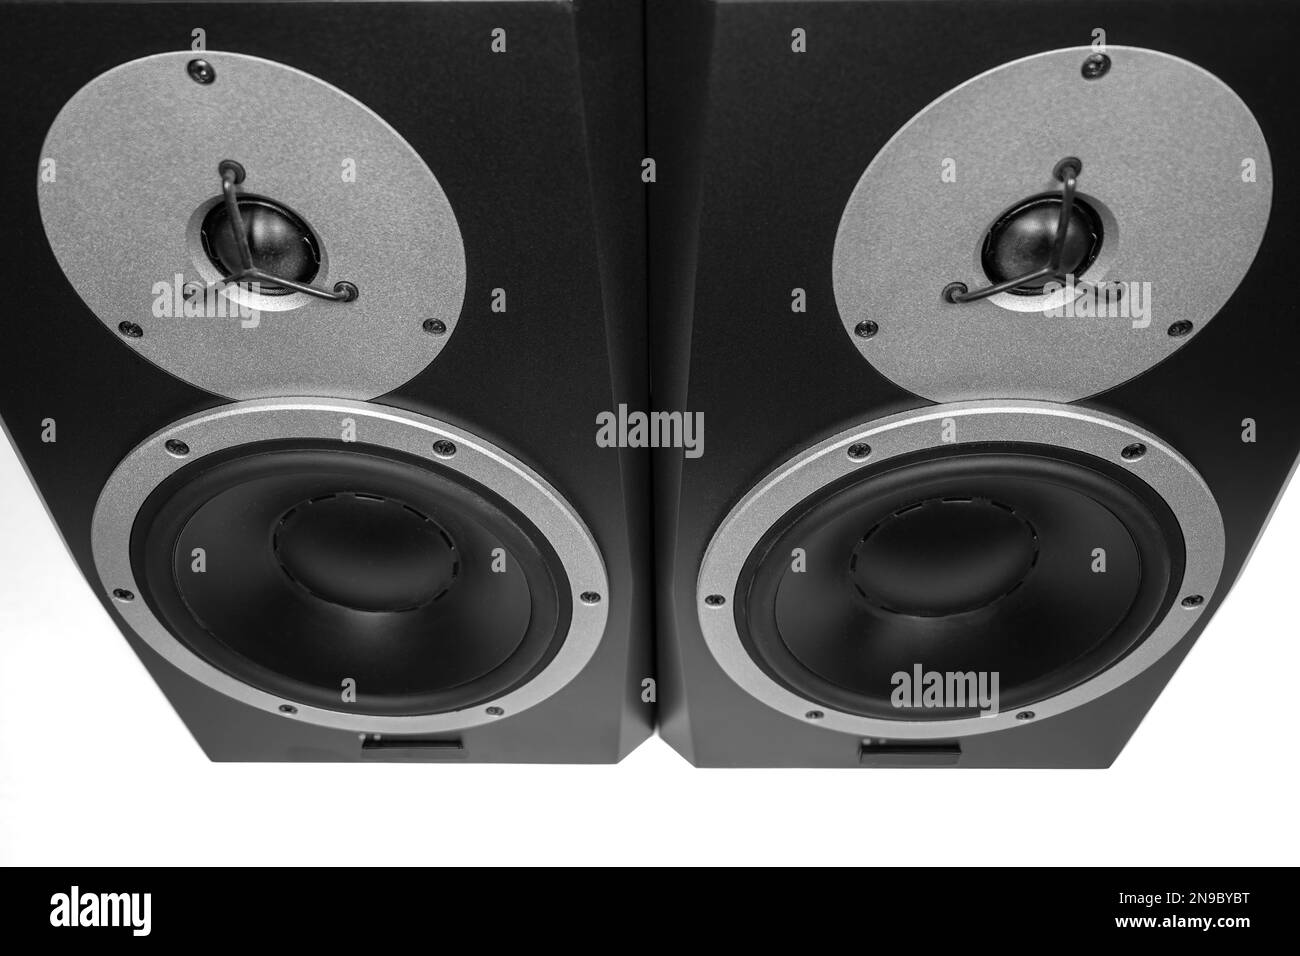 Two black audio speakers and studio monitors, musical equipment. Stock Photo